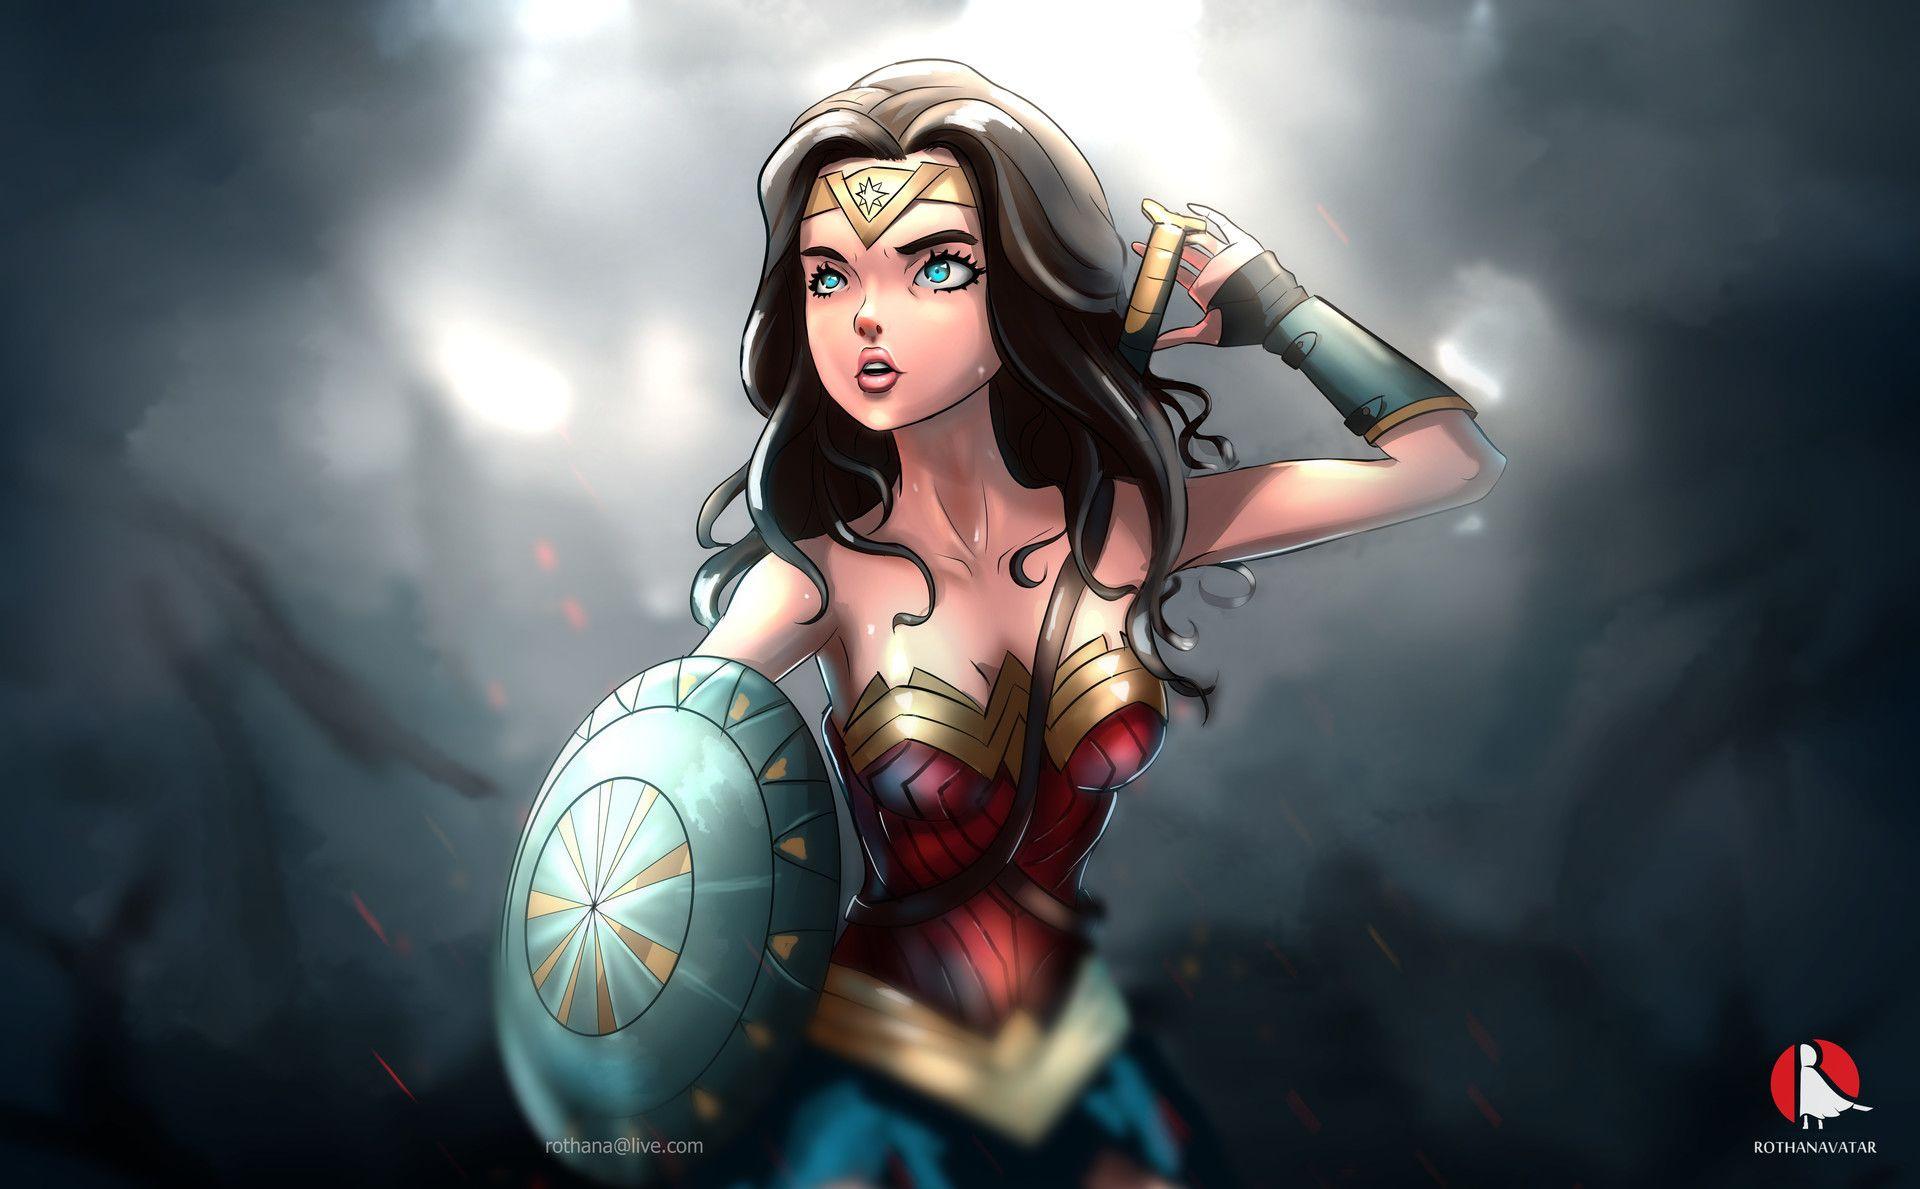 Wonder Woman Cartoon Wallpaper Free Wonder Woman Cartoon Background